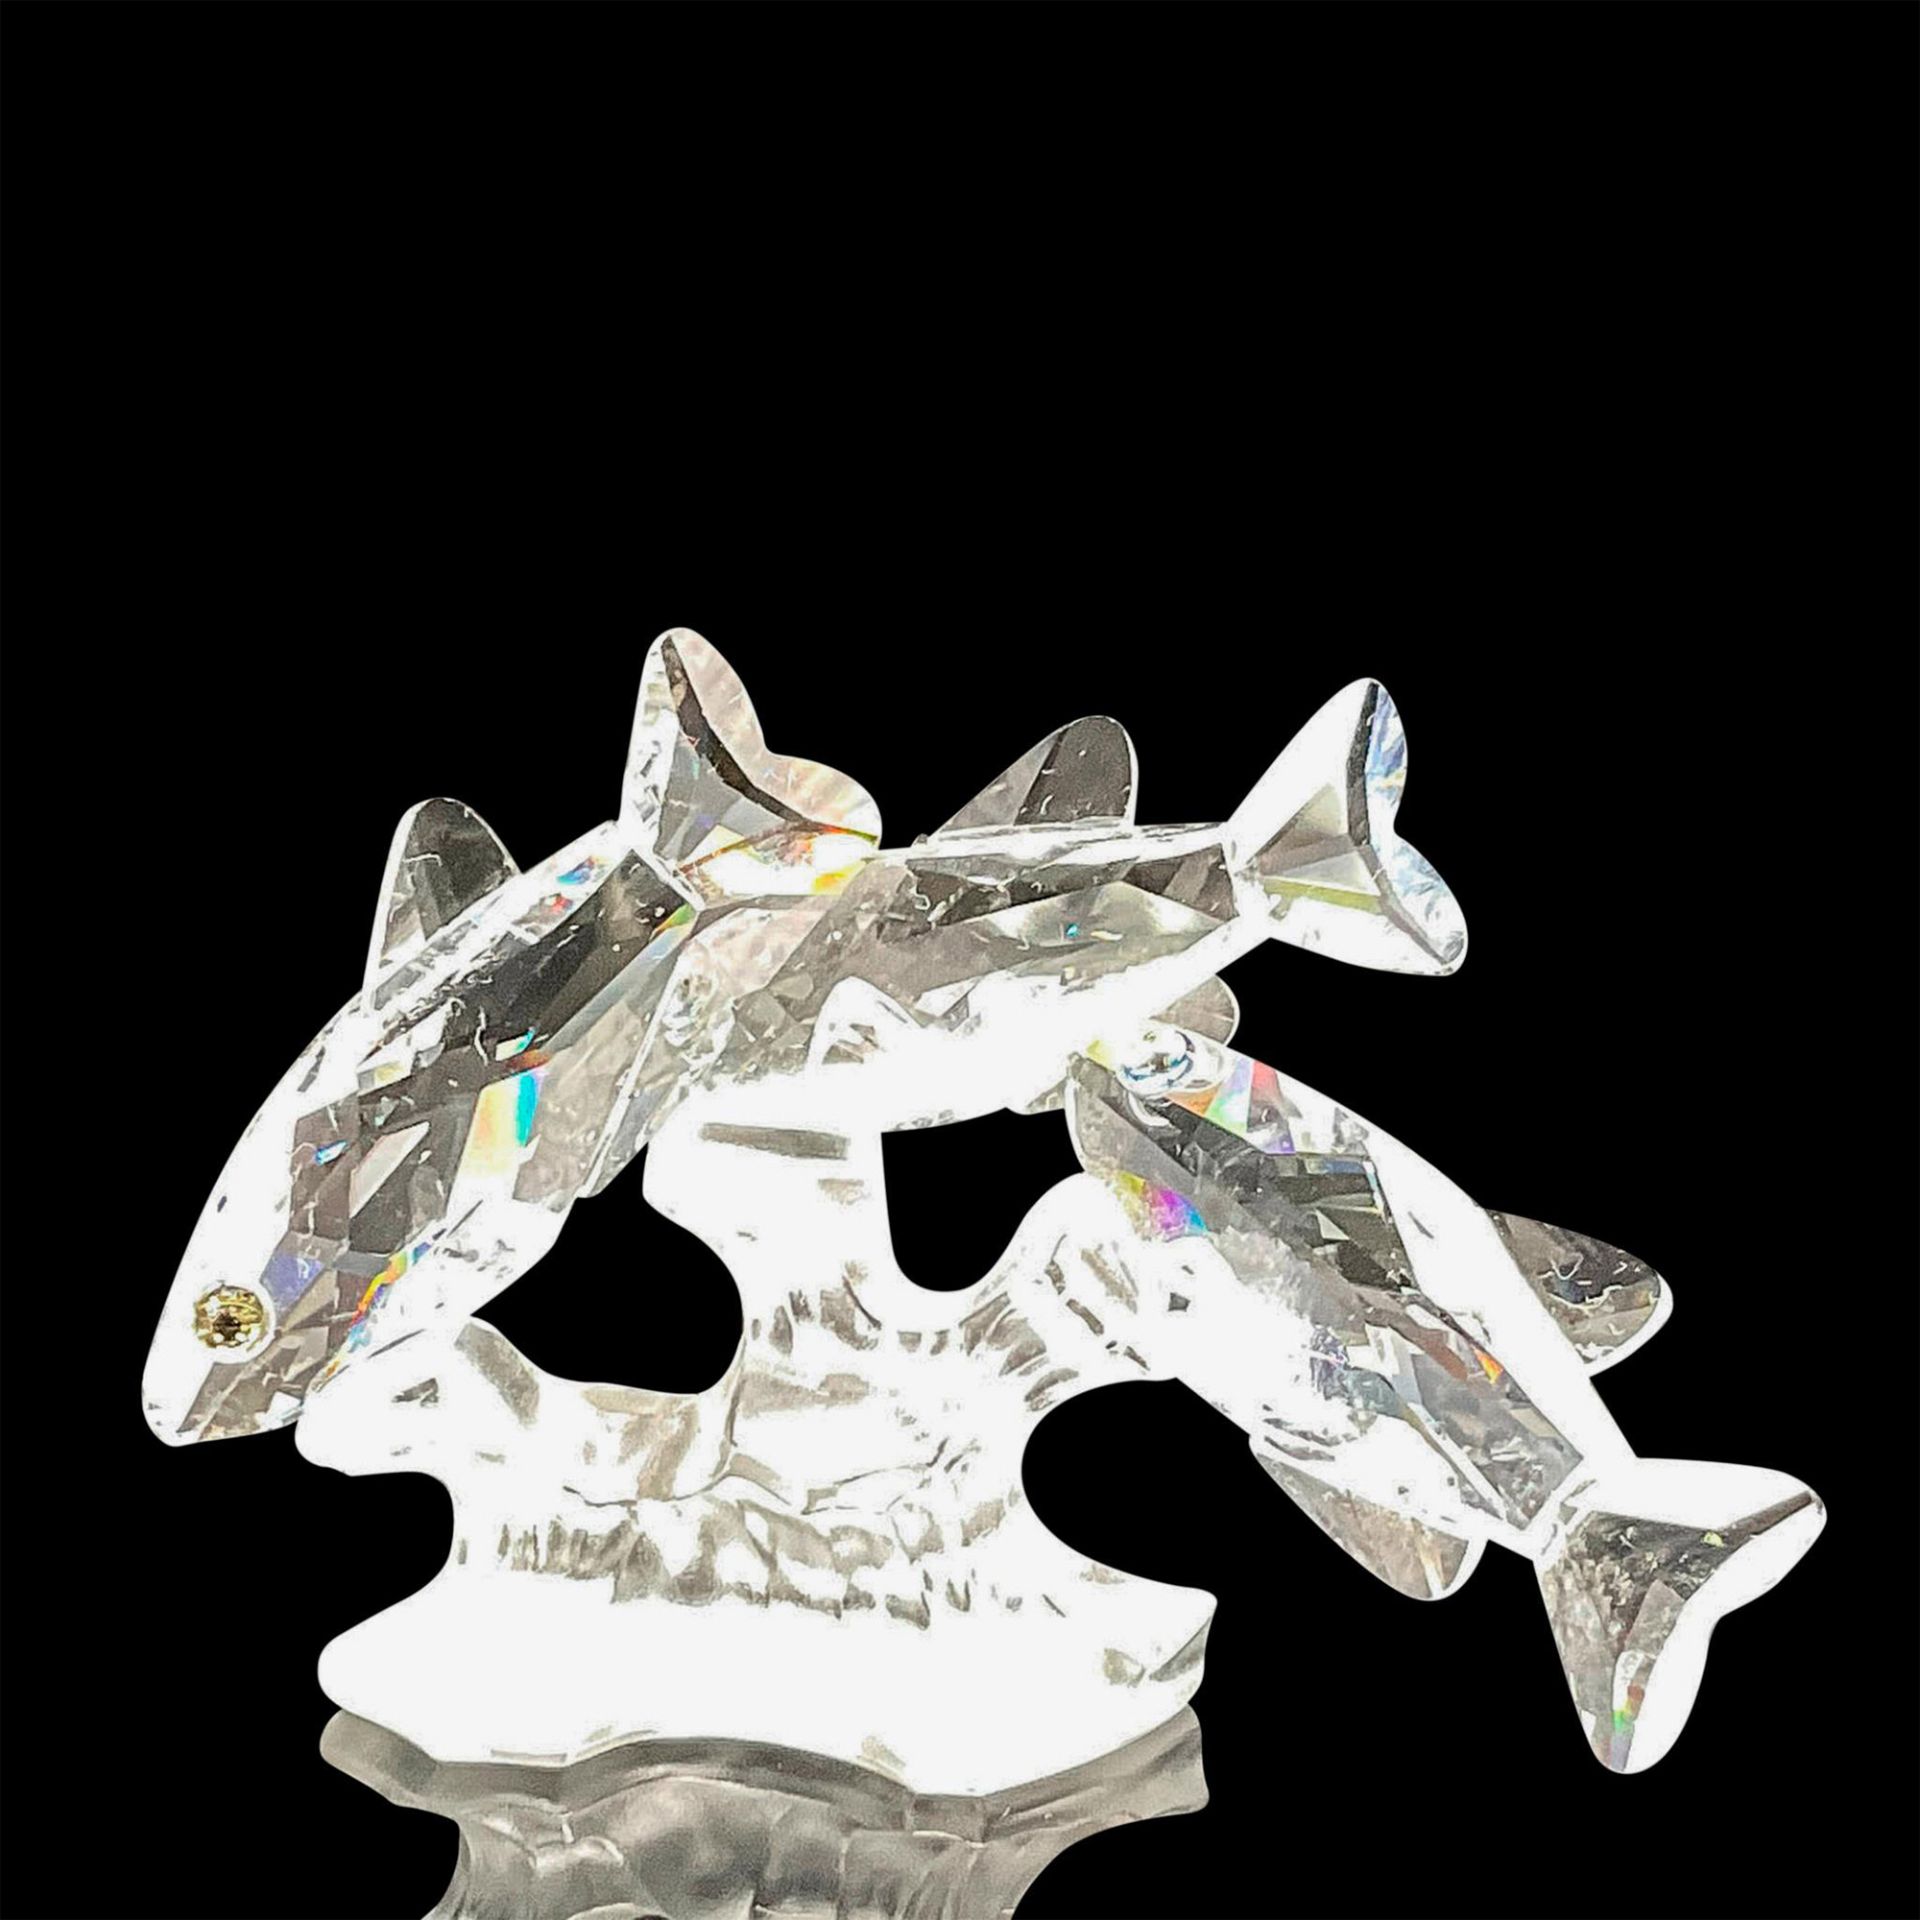 Swarovski Silver Crystal Figurines, Three South Sea Fish